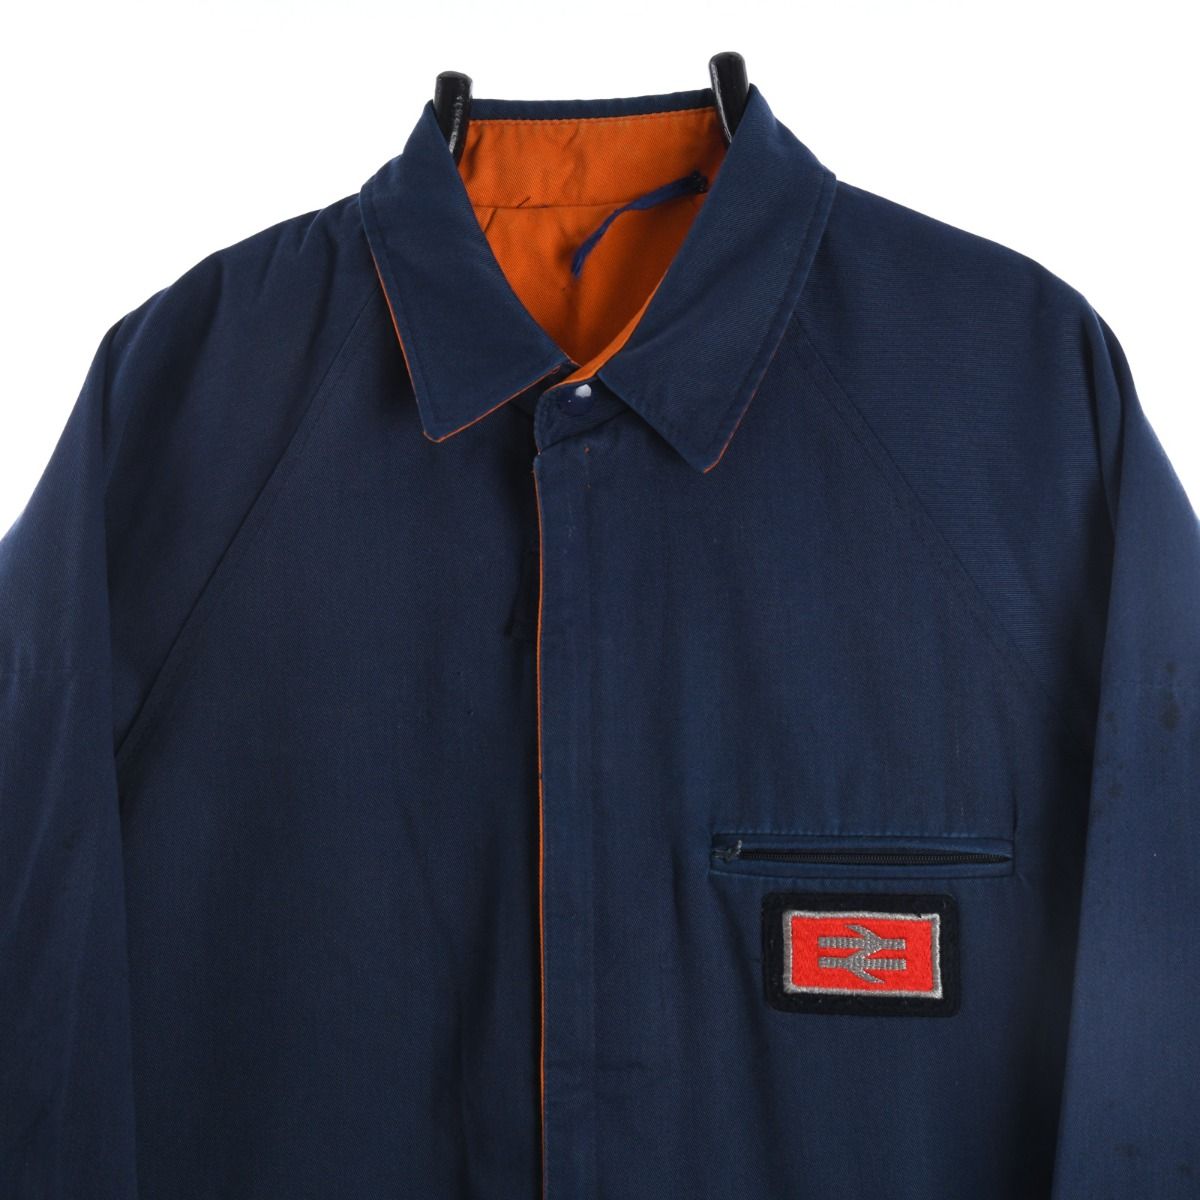 Vintage 1980s British Rail Workers Chore Jacket